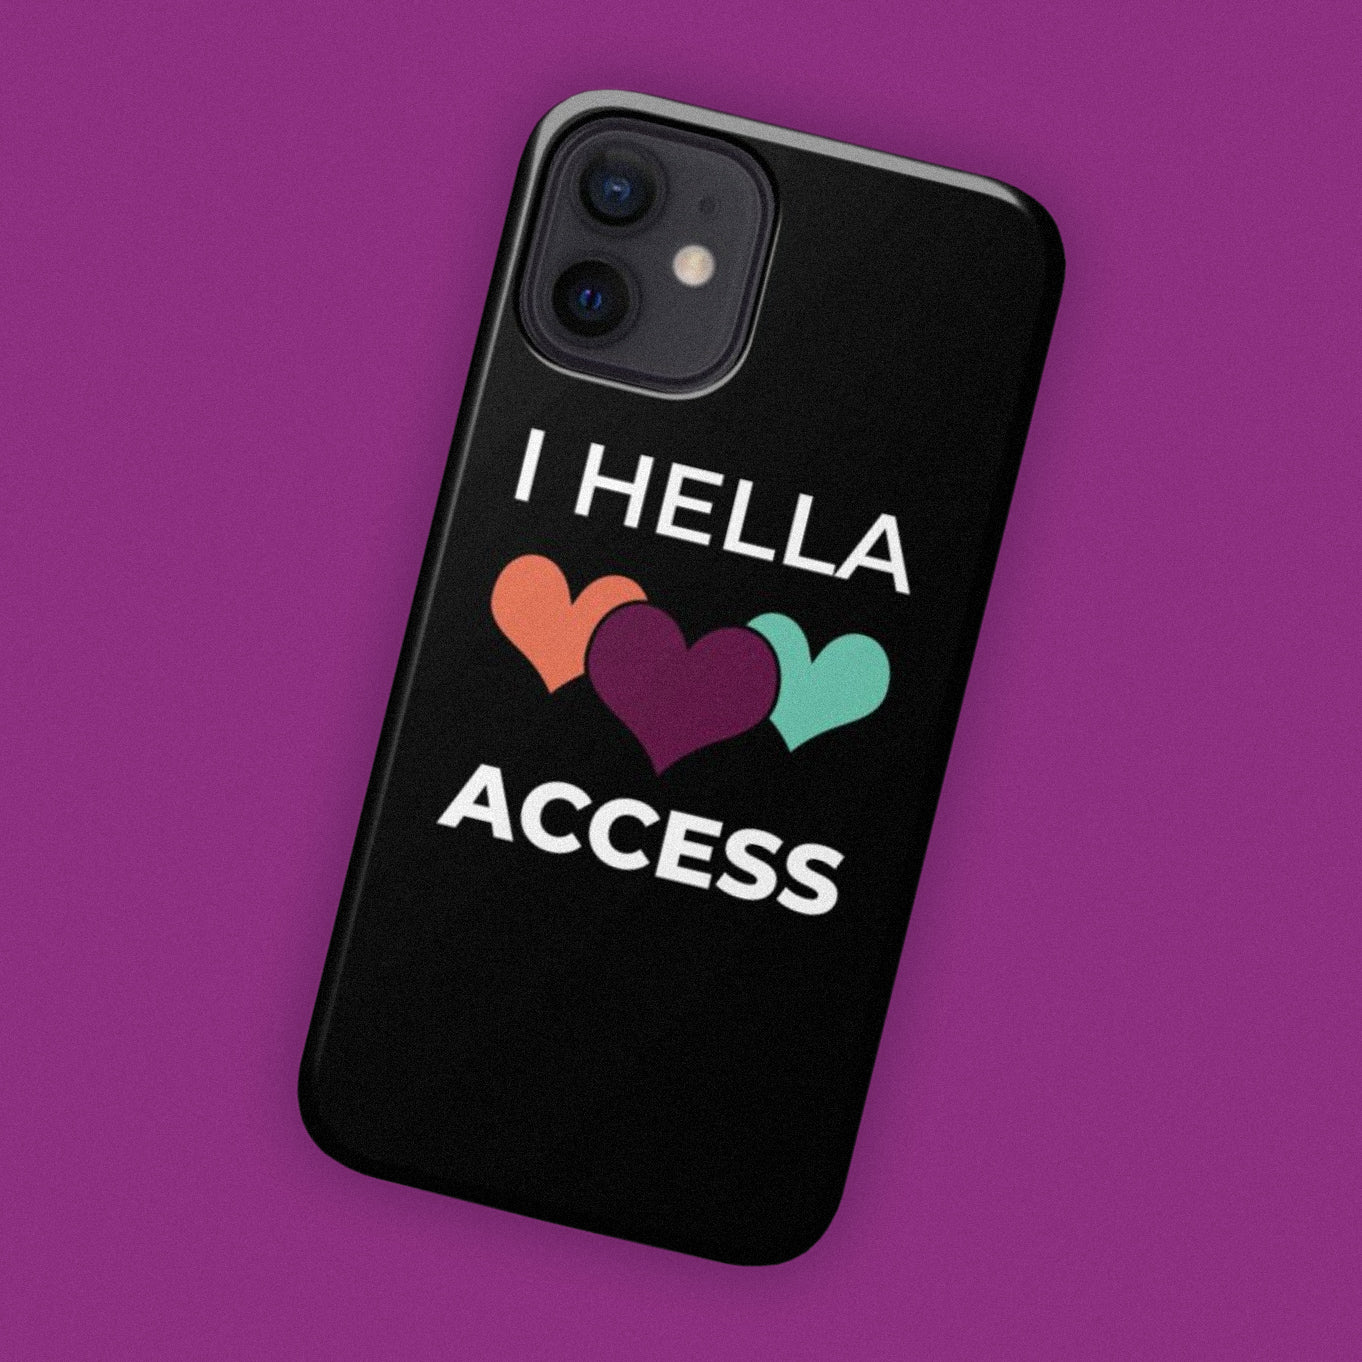 ACCESS Reproductive Justice: I Hella Heart ACCESS phone case